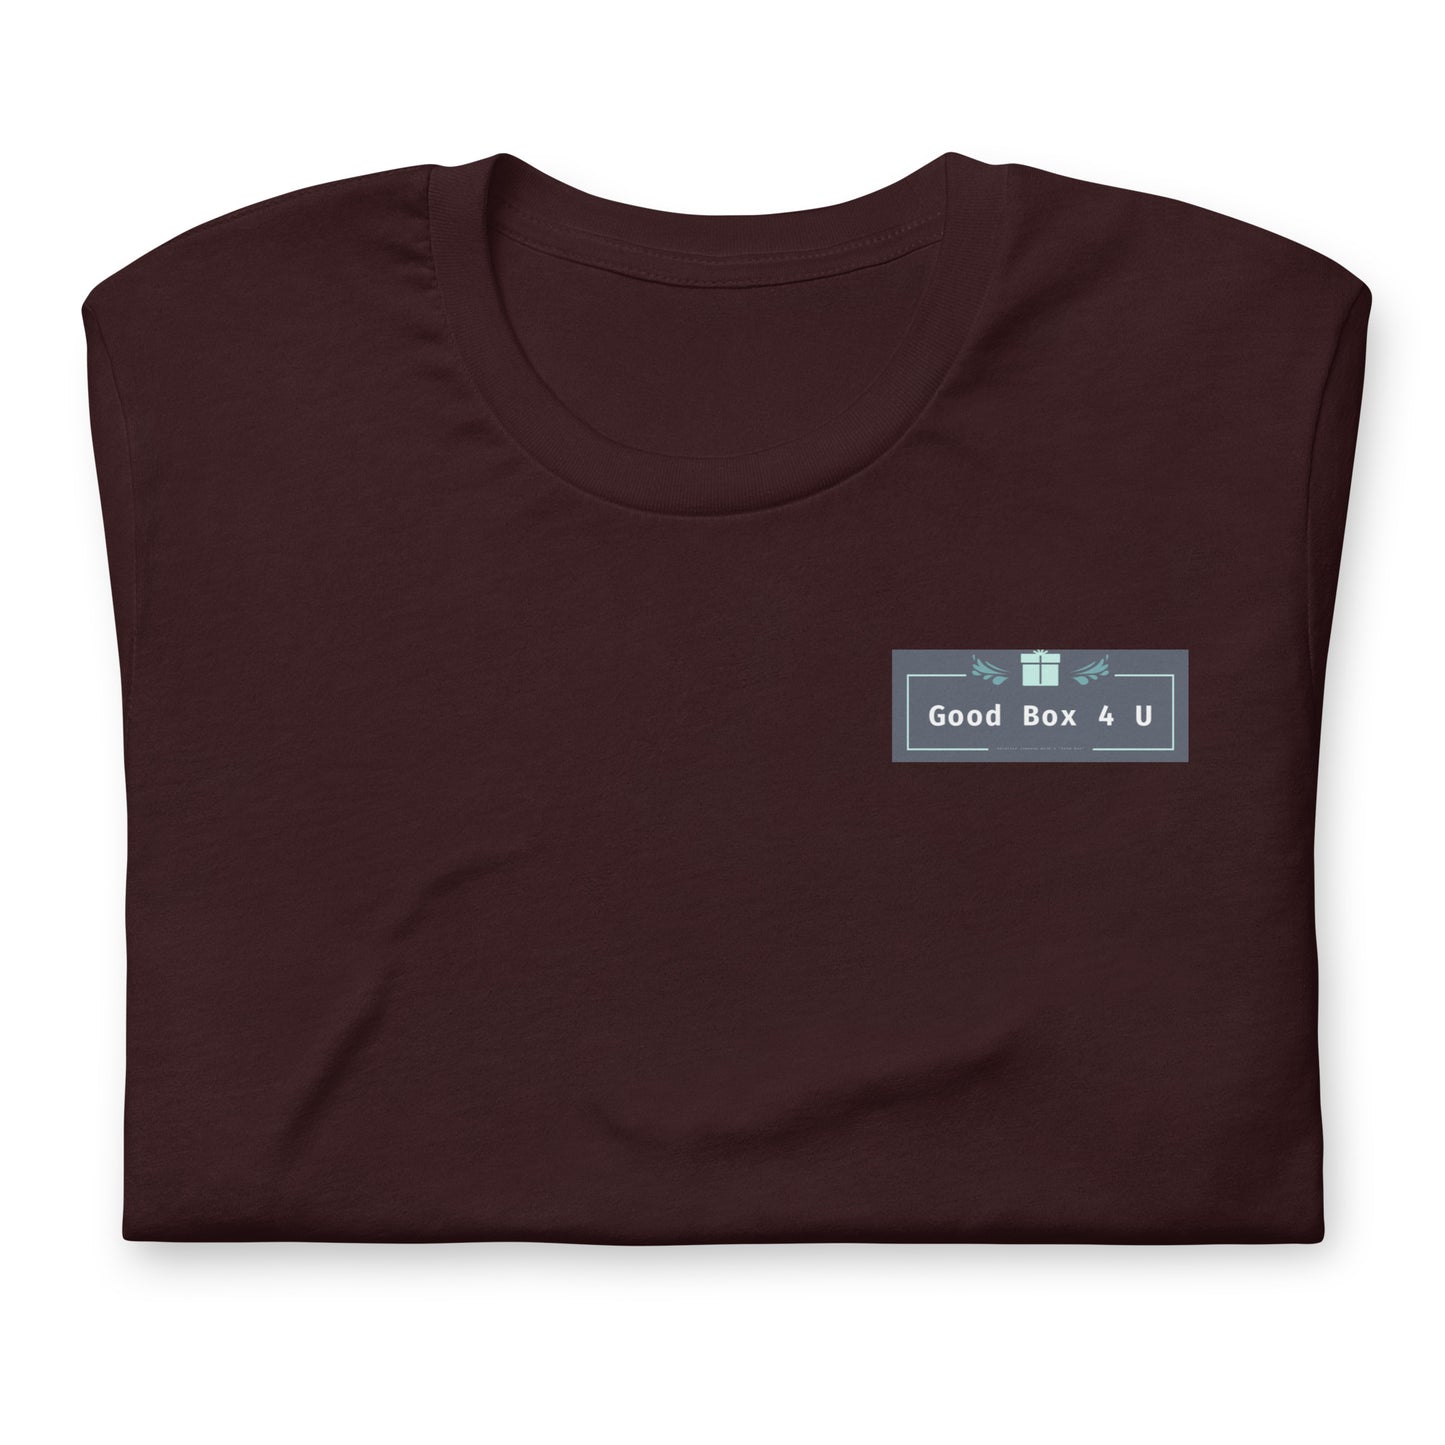 "Good Box 4 U" Unisex t-shirt